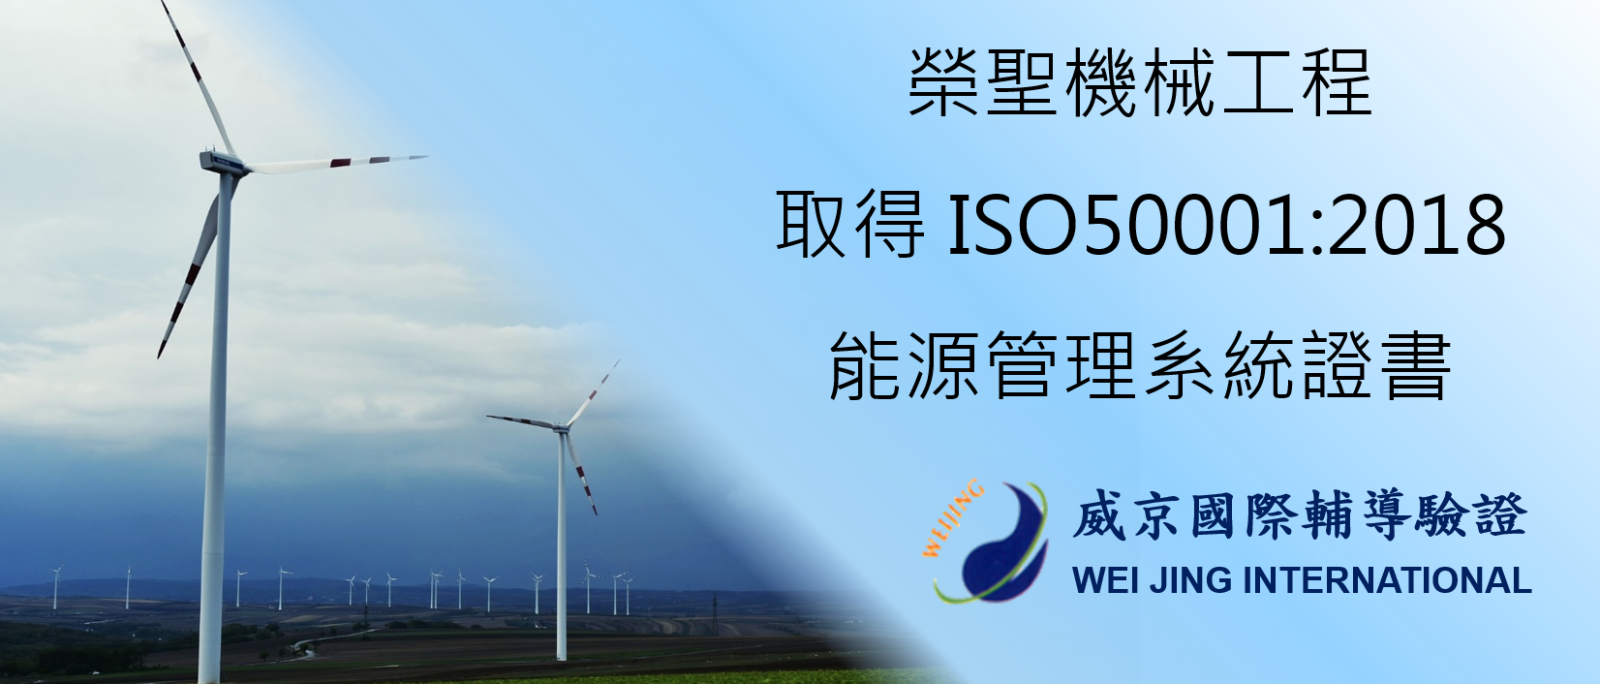 ISO50001 2018 輔導